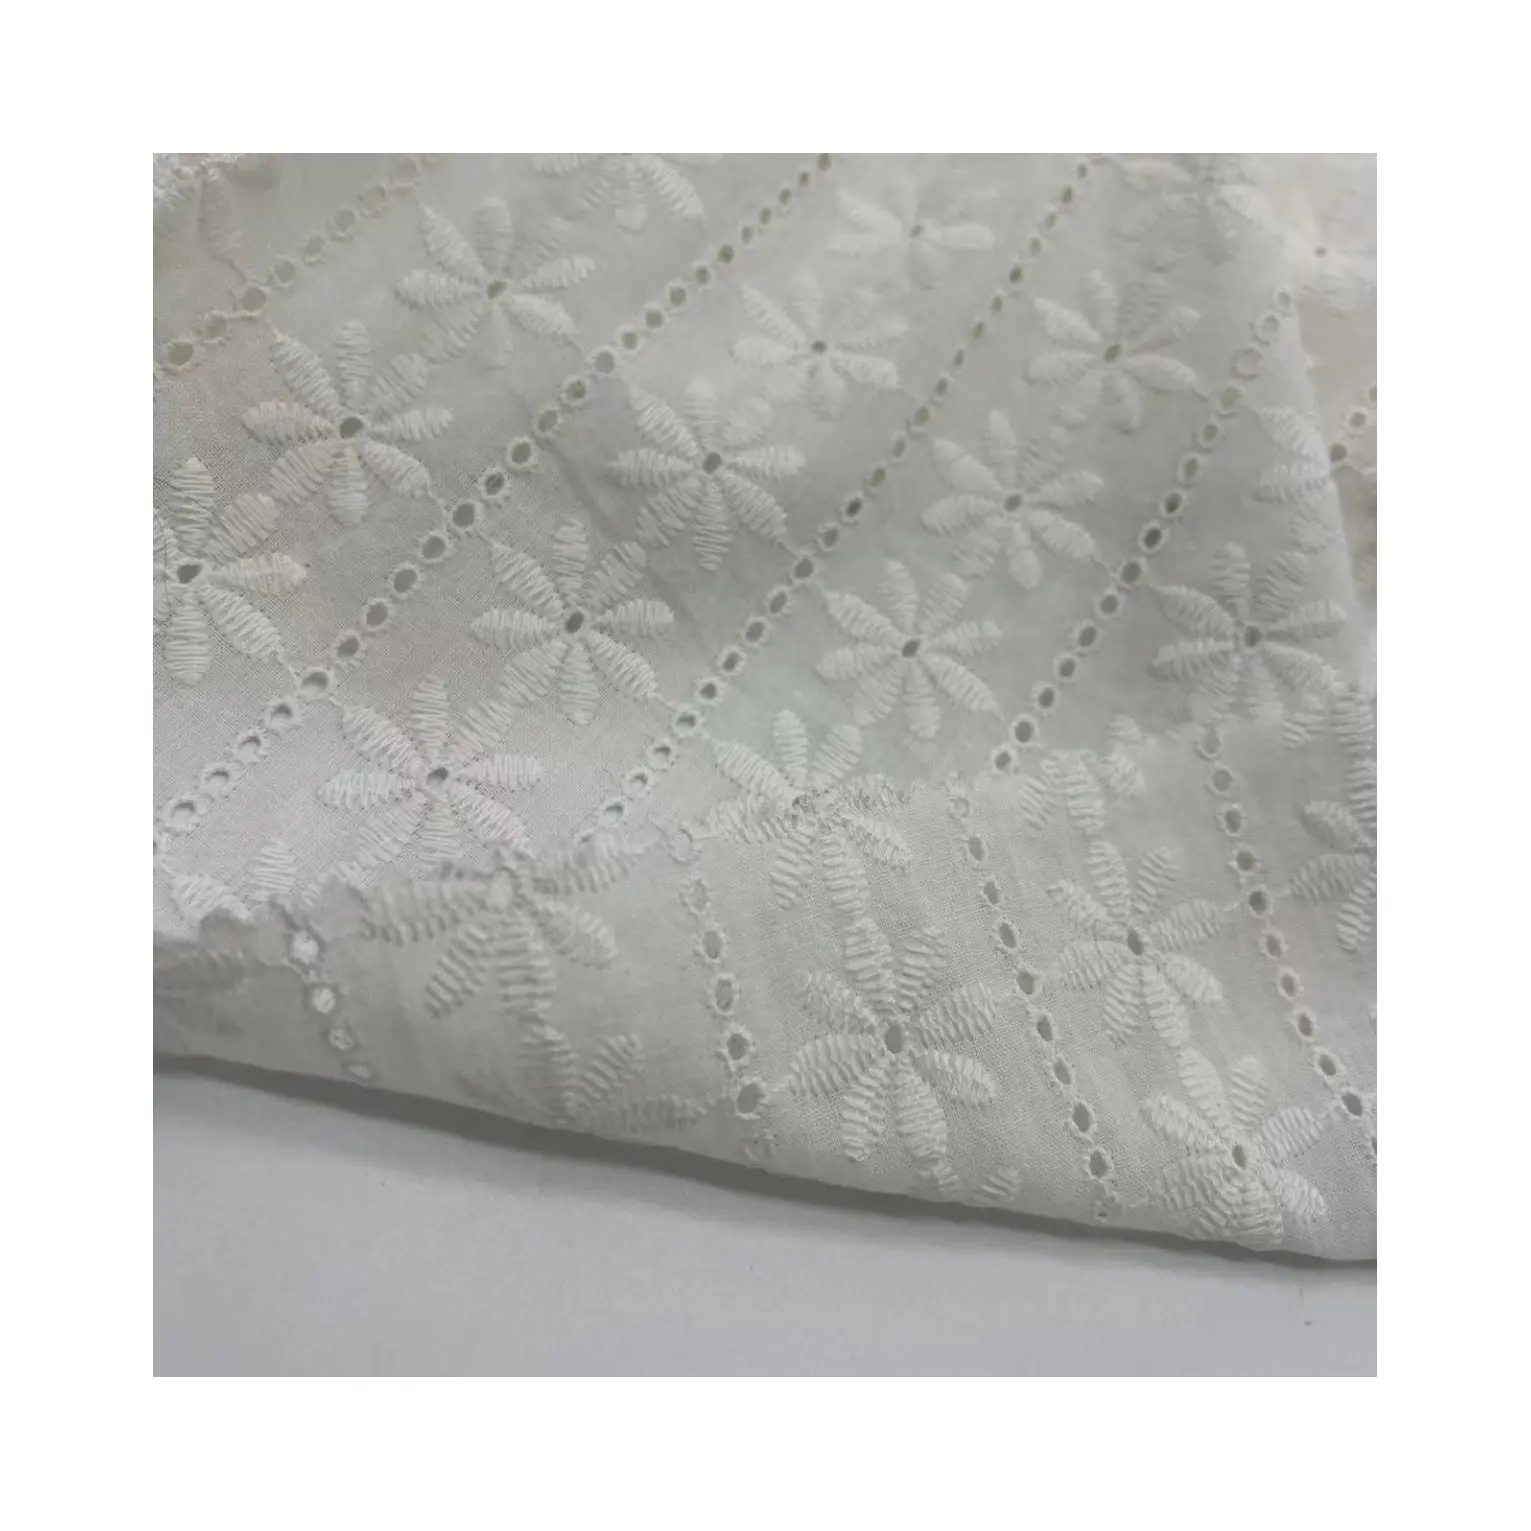 2024 barang laris tirai putih sulam bulu mata kain bunga katun 100% untuk tekstil rumahan